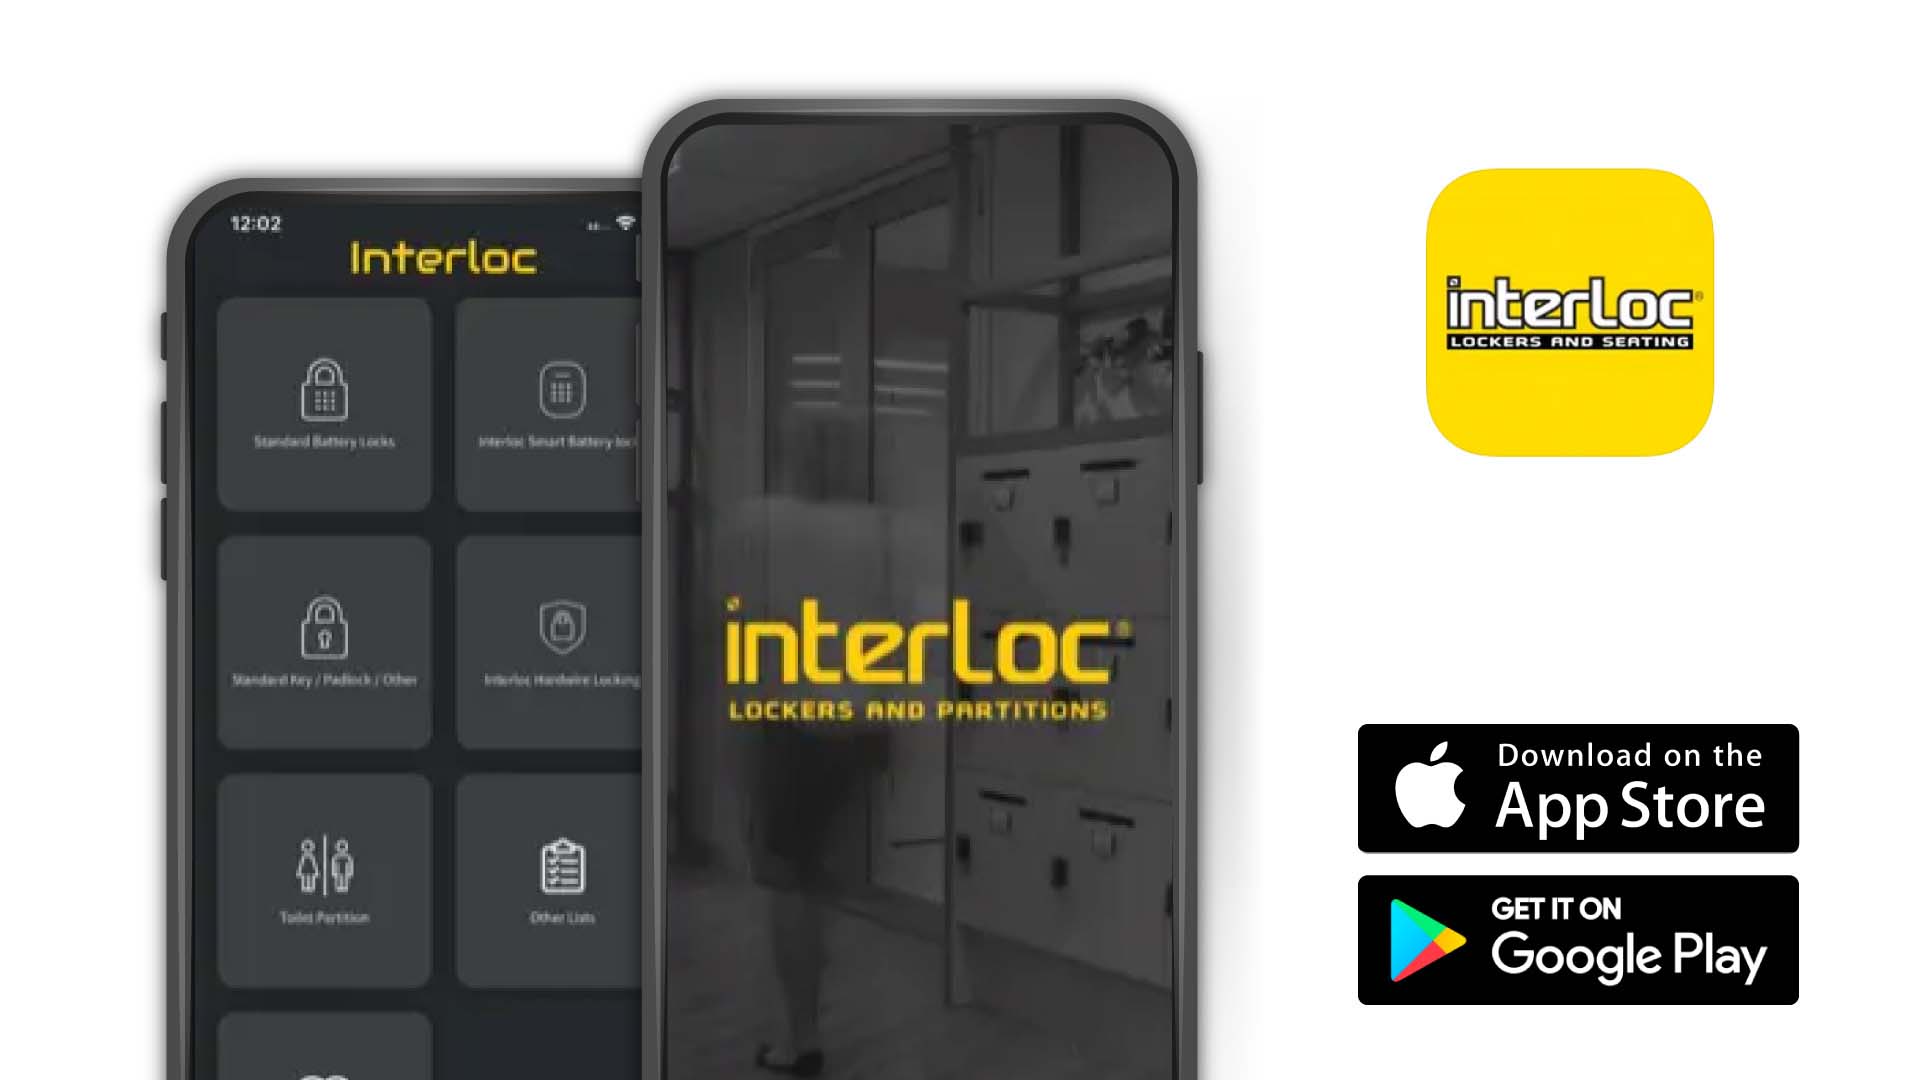 The Interloc App brought to you by Identity Pixel - App Design & Development in Essex